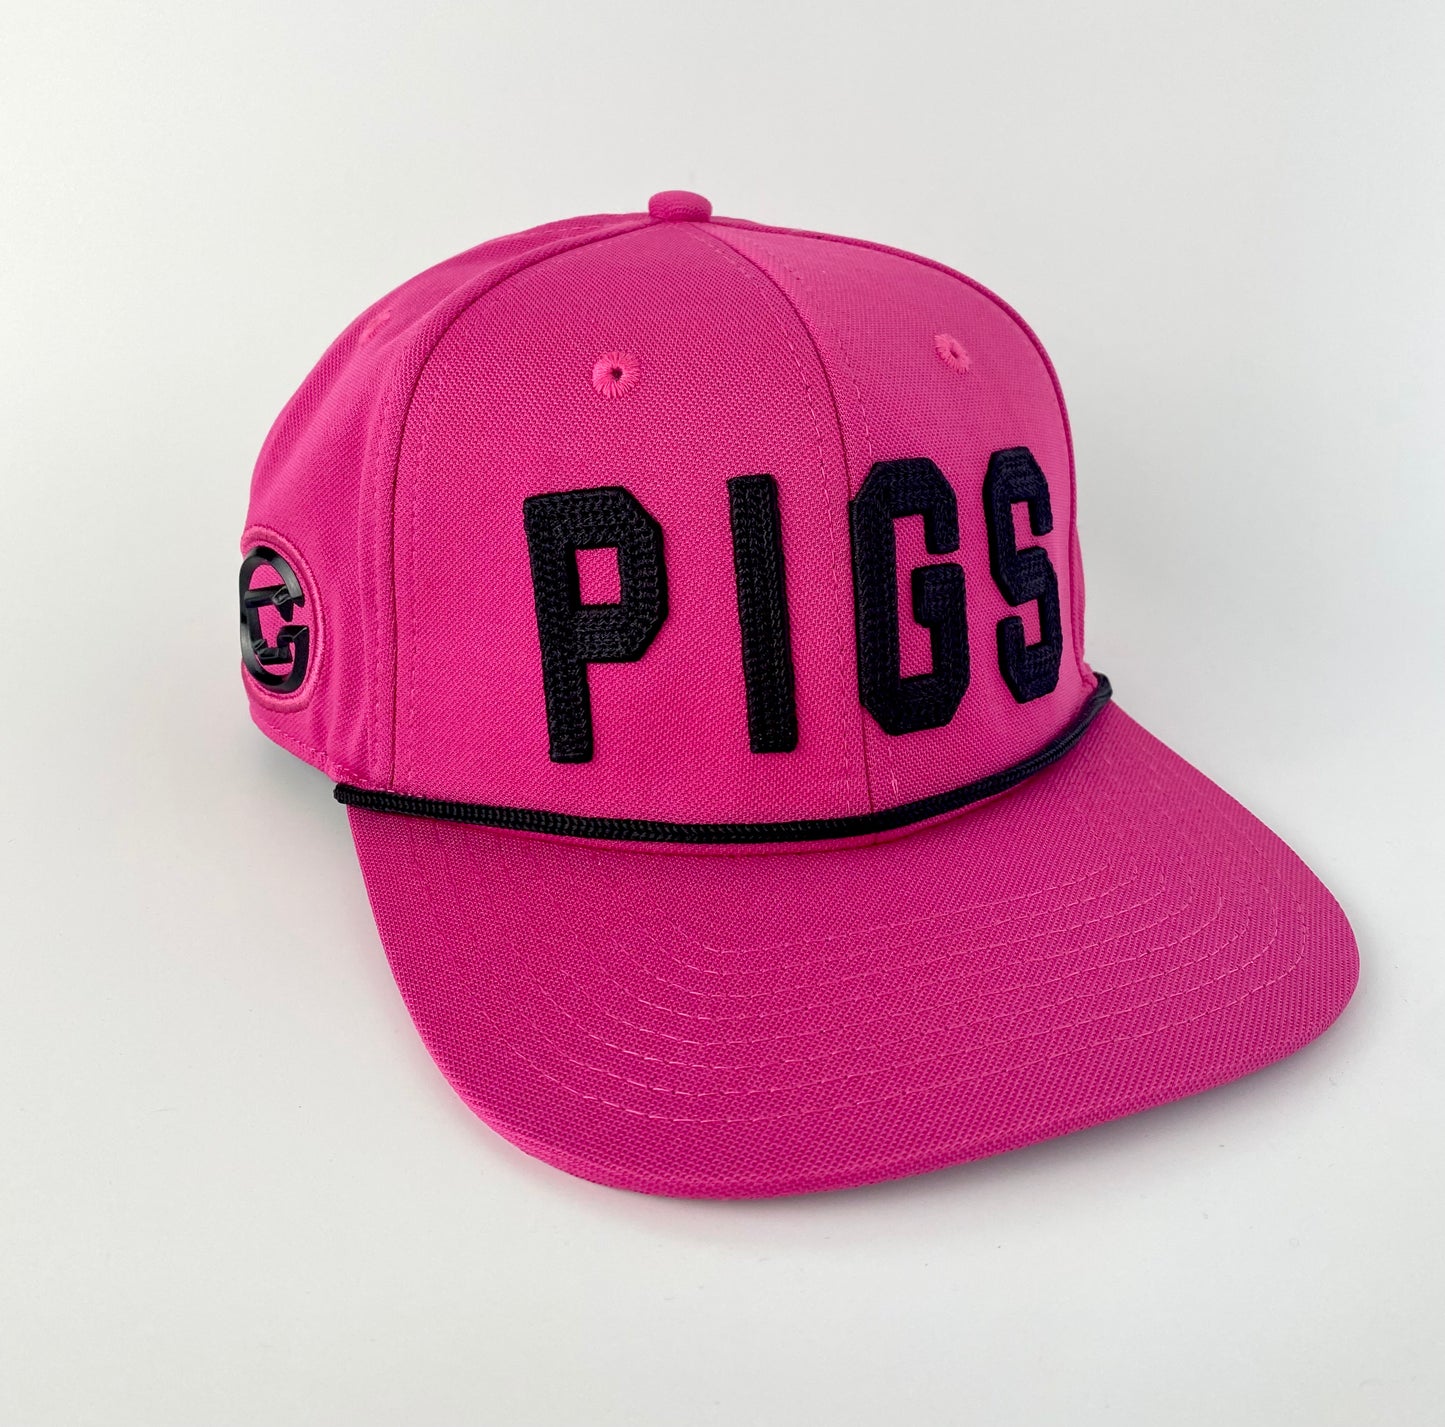 "OG" PIGS -Bubblegum with Black - Snapback - Flat Bill